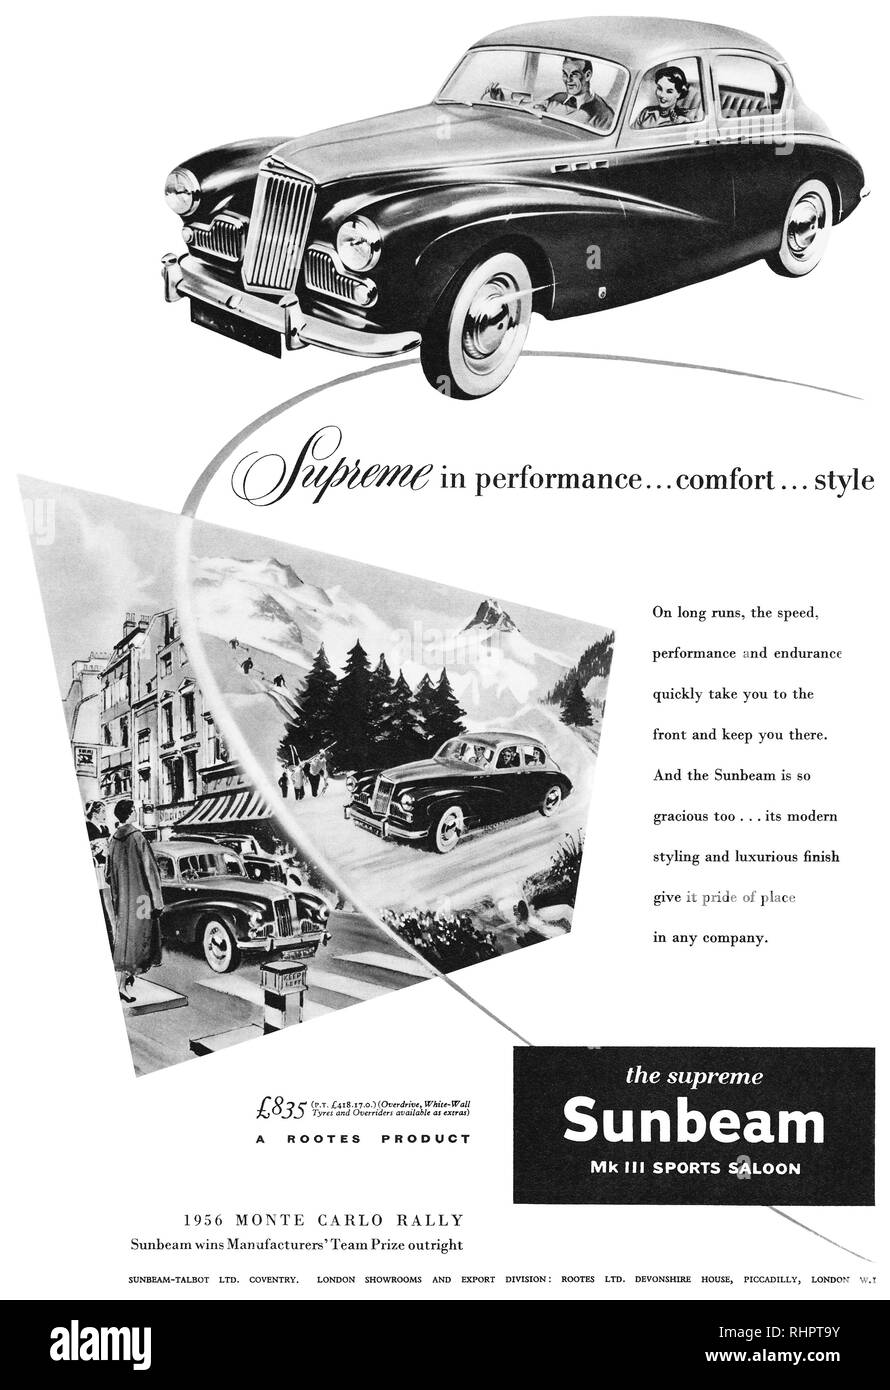 1956 British advertisement for the Sunbeam Mark III sports saloon motor car. Stock Photo